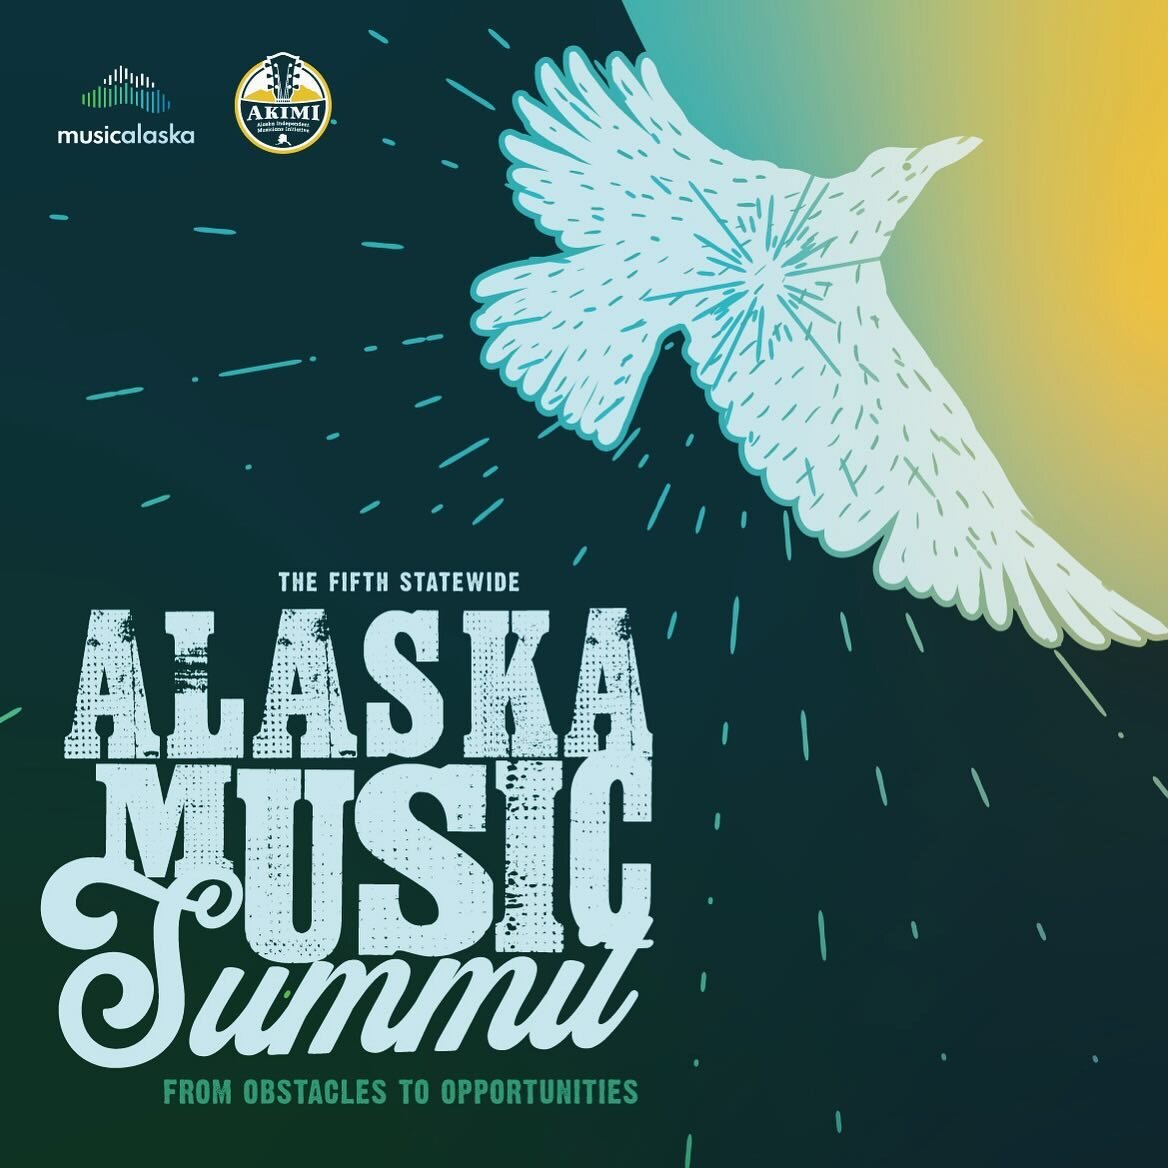 @akimimusic Alaska Music Summit spots are going fast! Registration link in their bio. #poeticadesign #whiteraven 
.
.
.
#posterdesign #musicposter #alaskalife